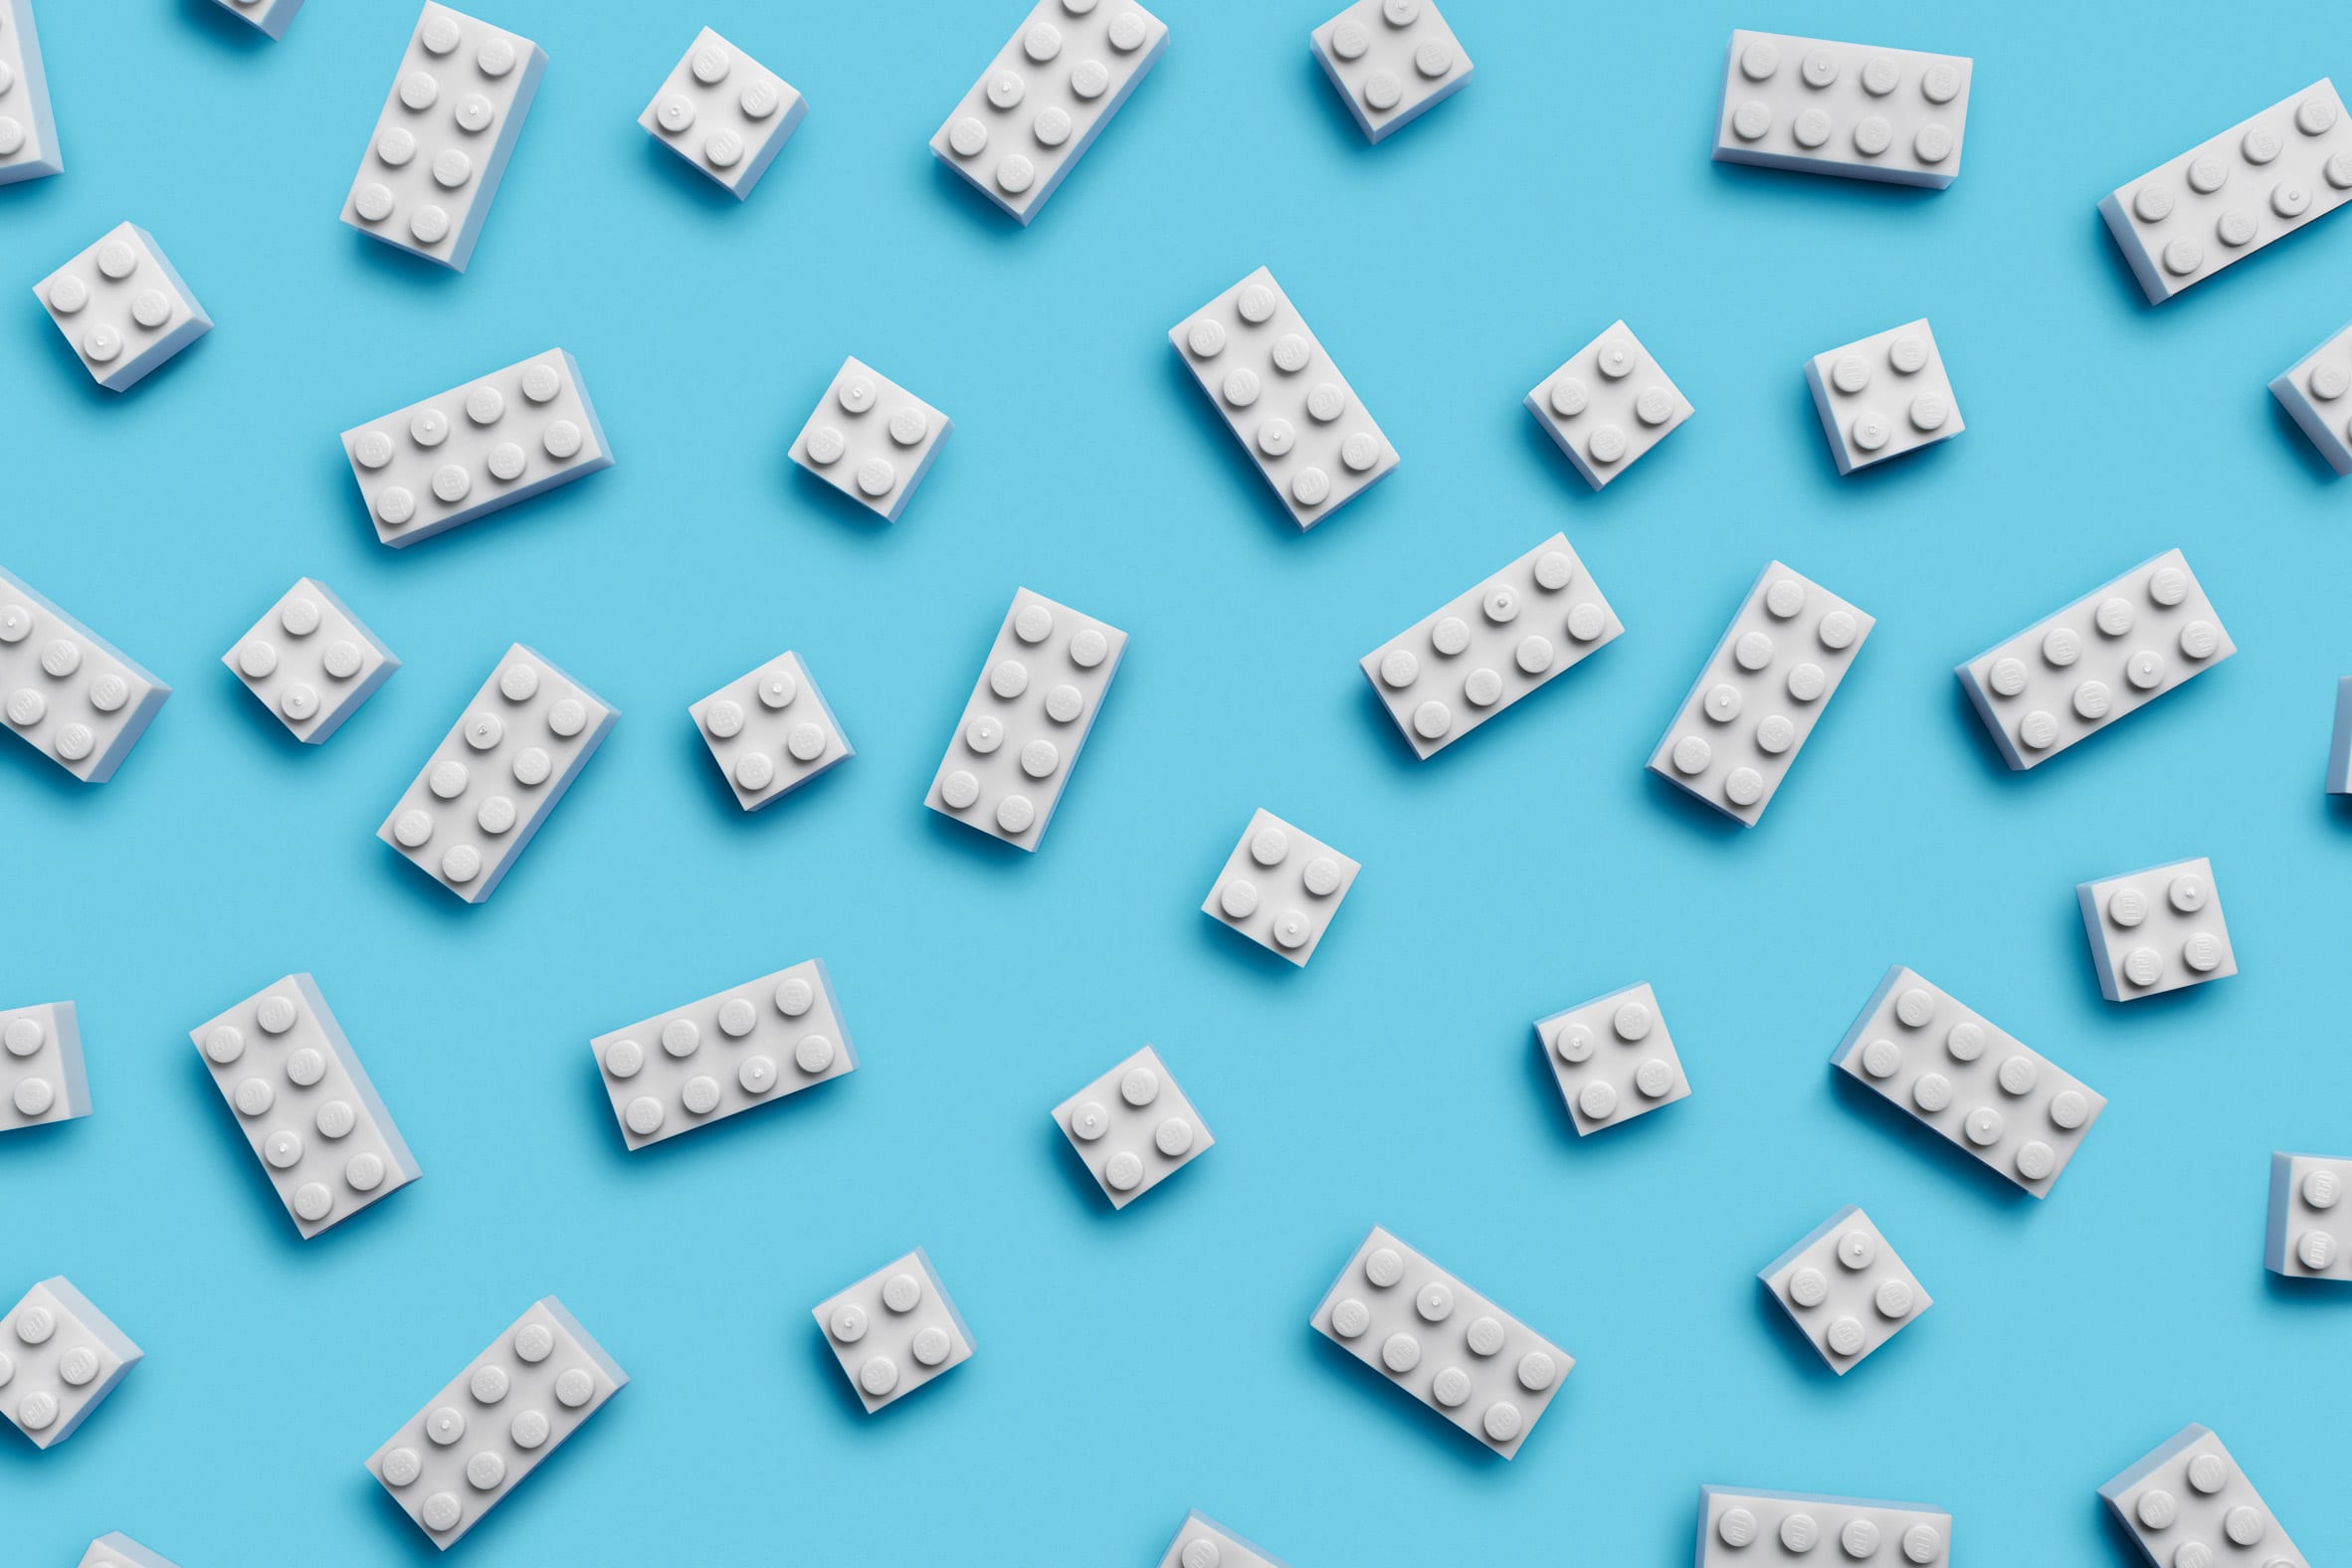 White Lego bricks on a blue surface